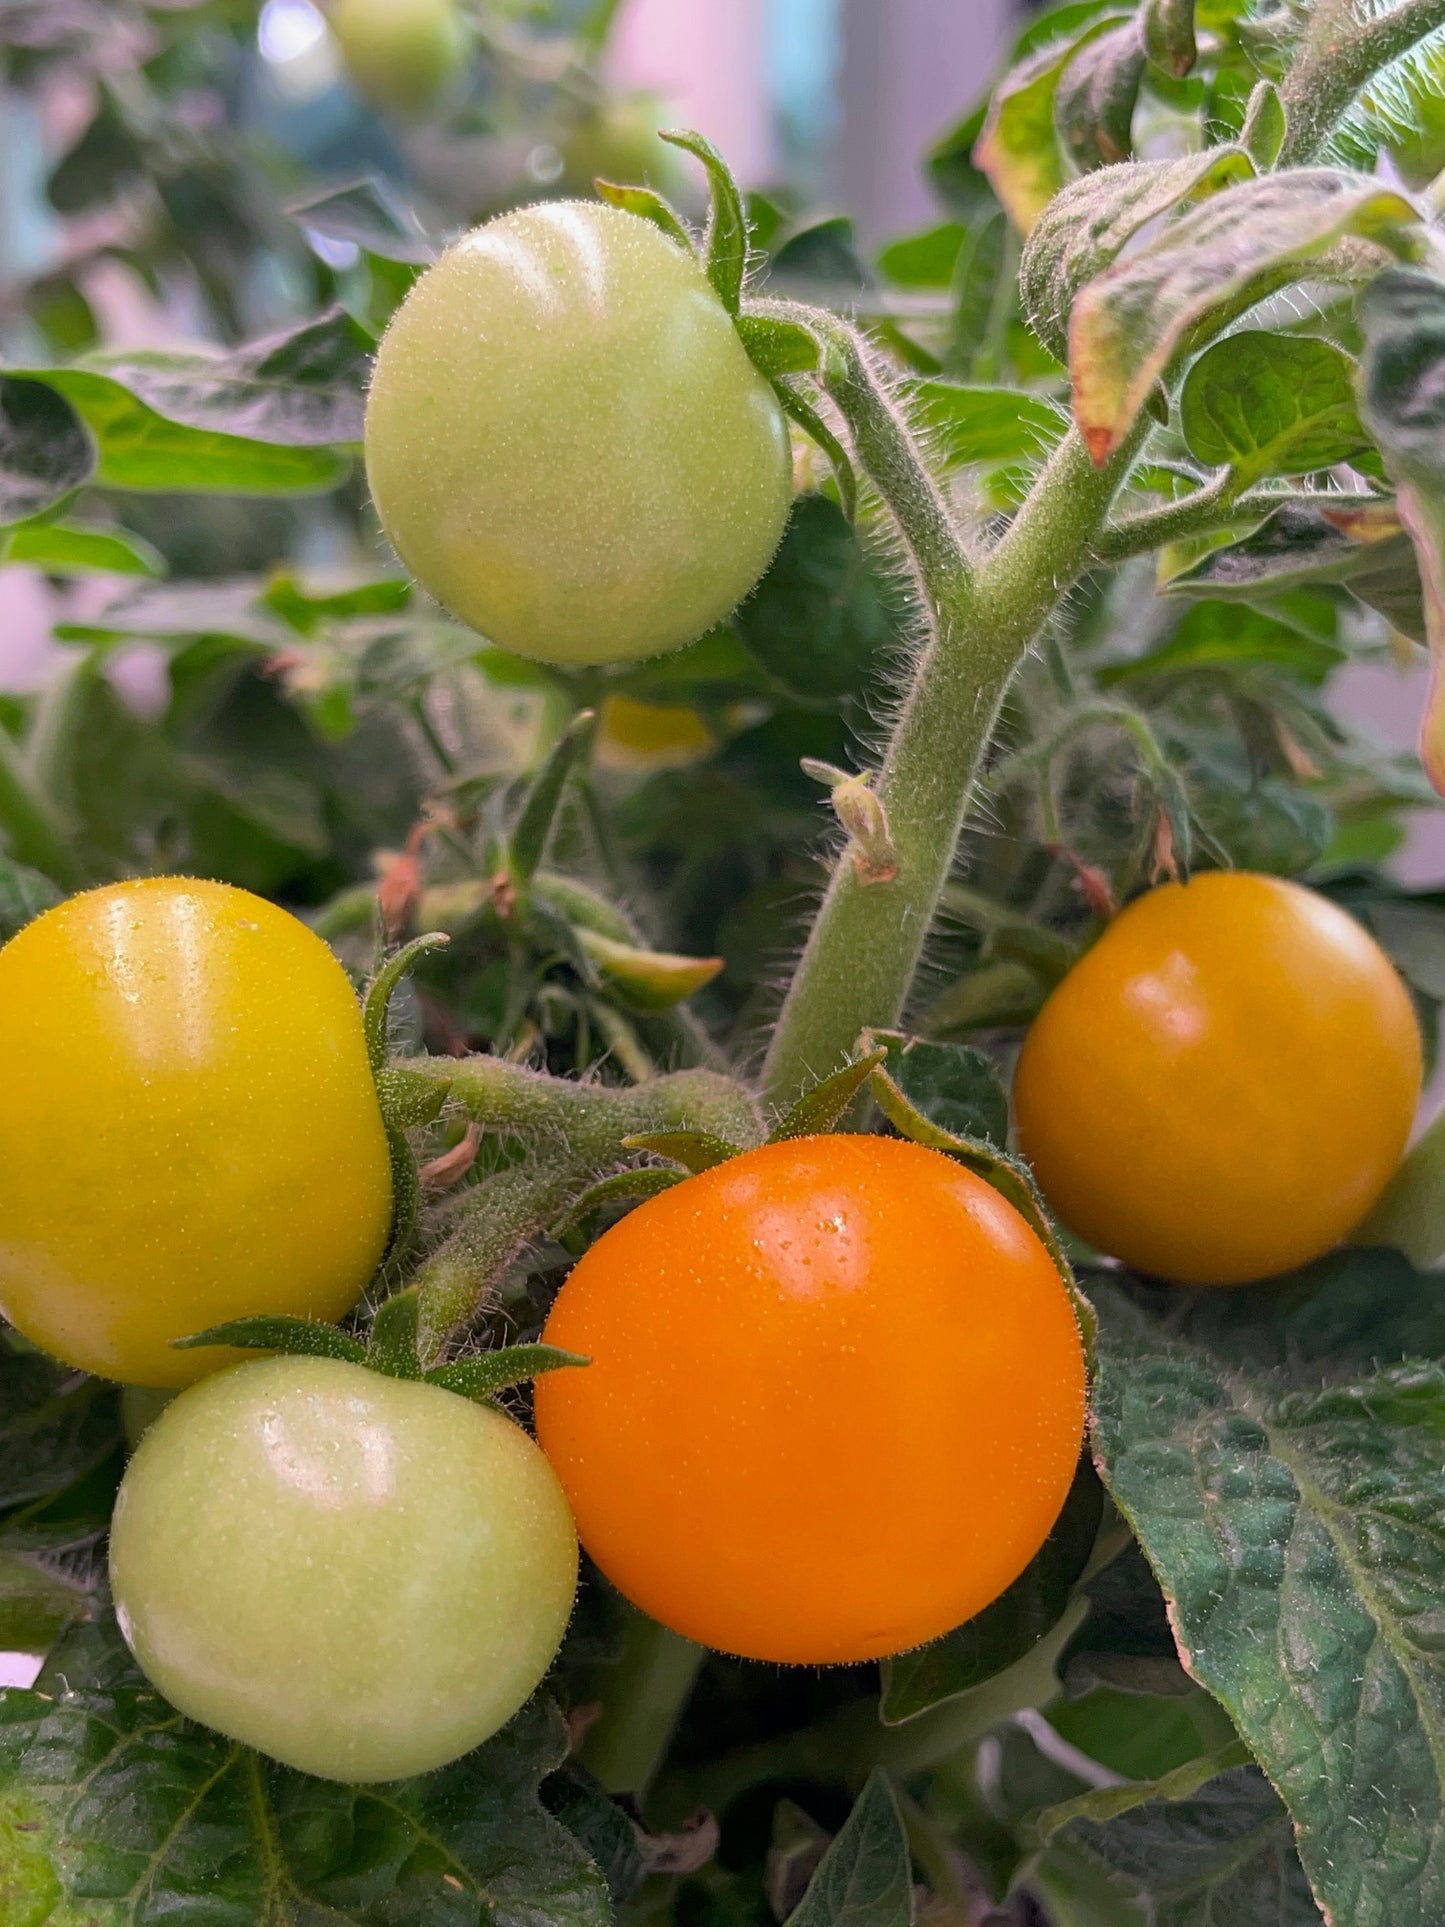 Orange Hat Tomato "Micro Dwarf" Seeds - 25 Pack - Hydroponic Seeds